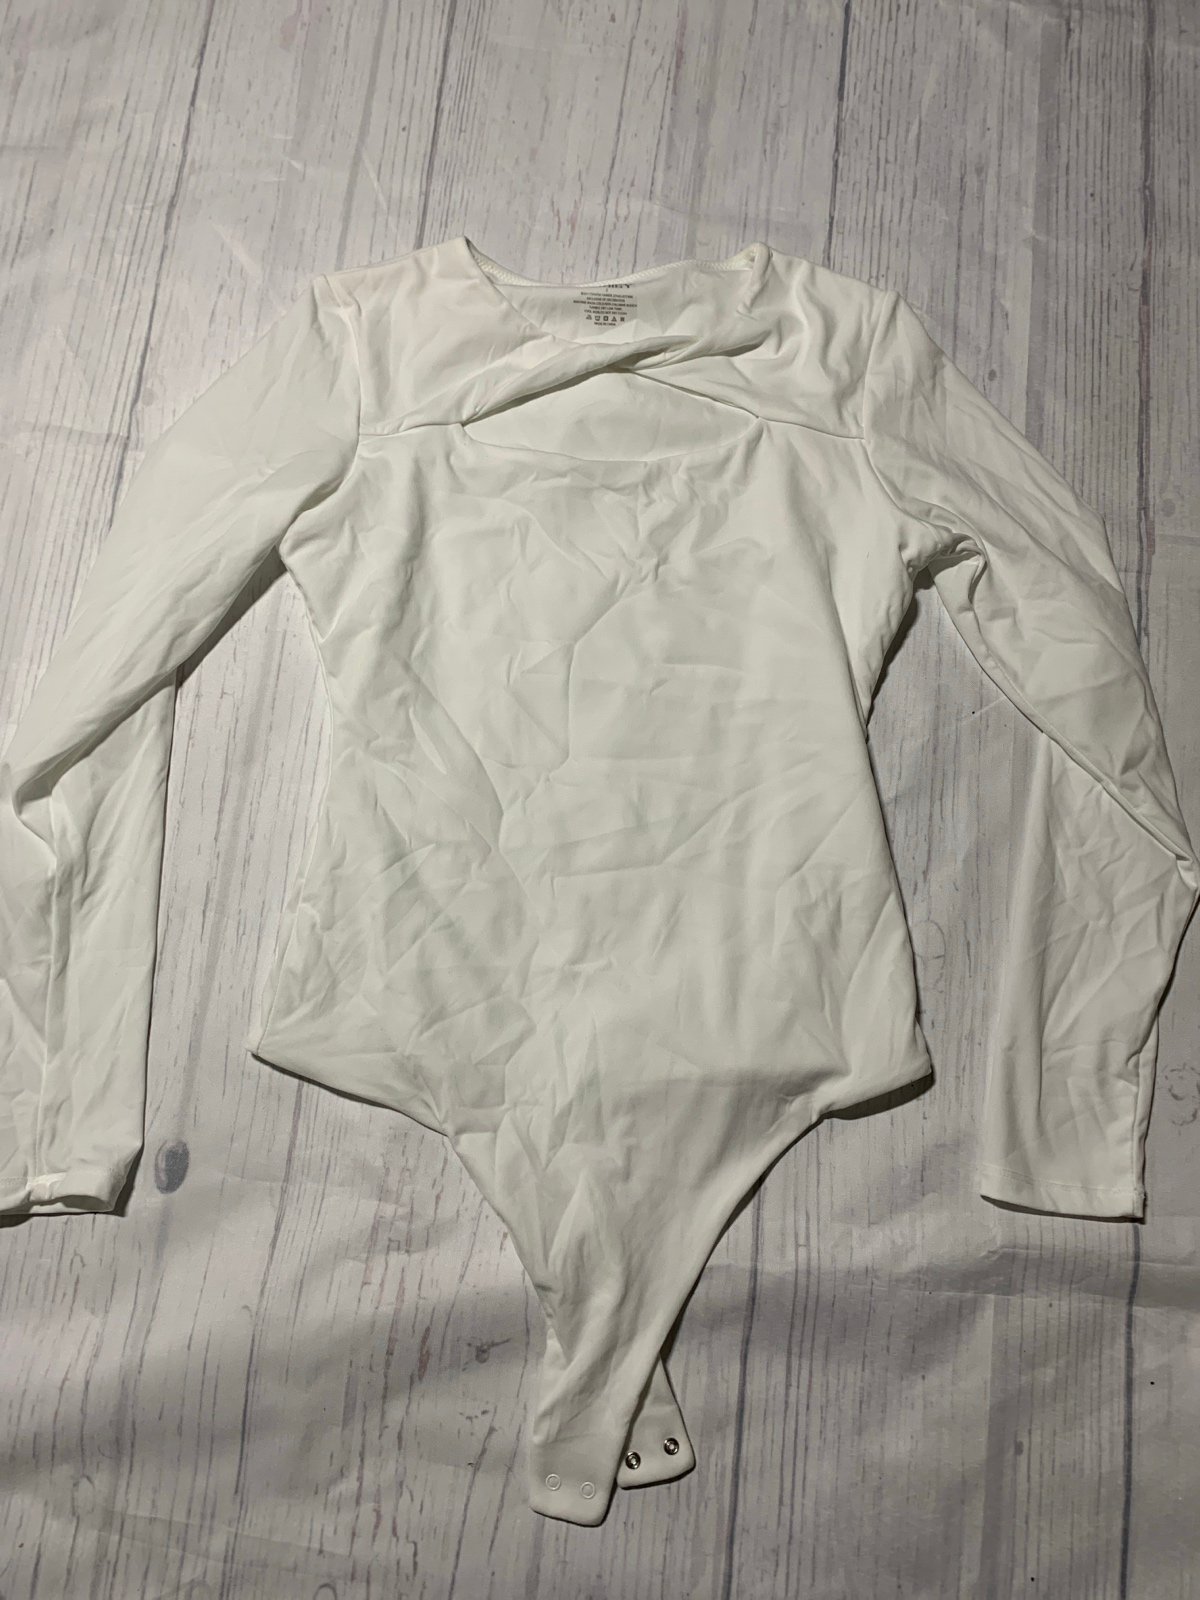 Latest  NWOT Womens White Long Sleeve Bodysuit Size Small Let9VIRVN for sale